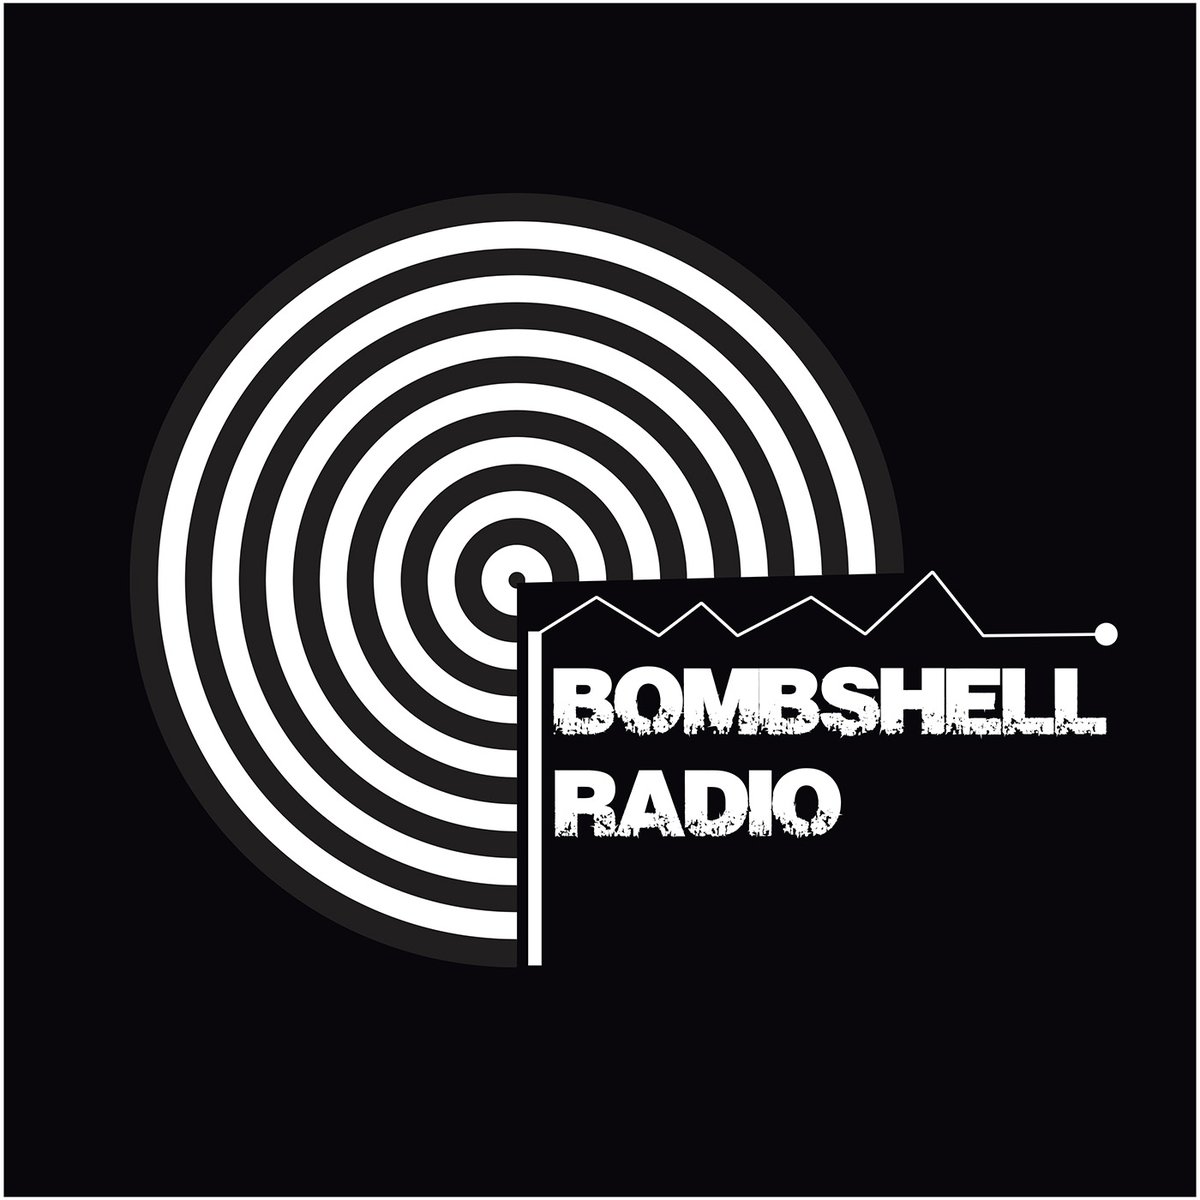 24-7 Radio! bombshellradio.com Listen Closely Radio #100 - Bombshell Radio Join Us!